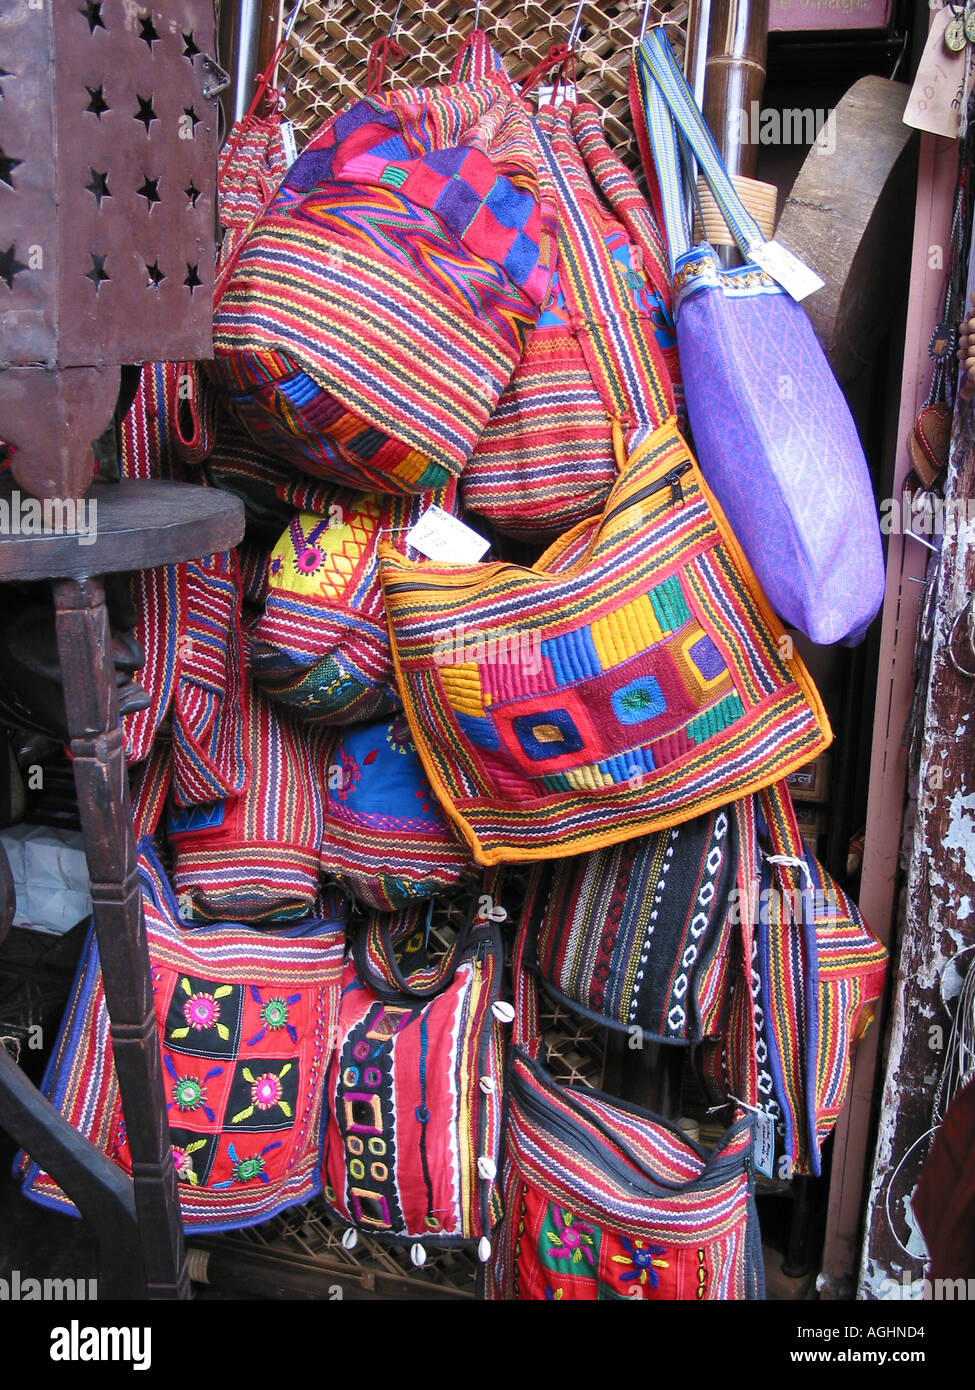 display of coloured handbags in Camden Town London England Stock Photo